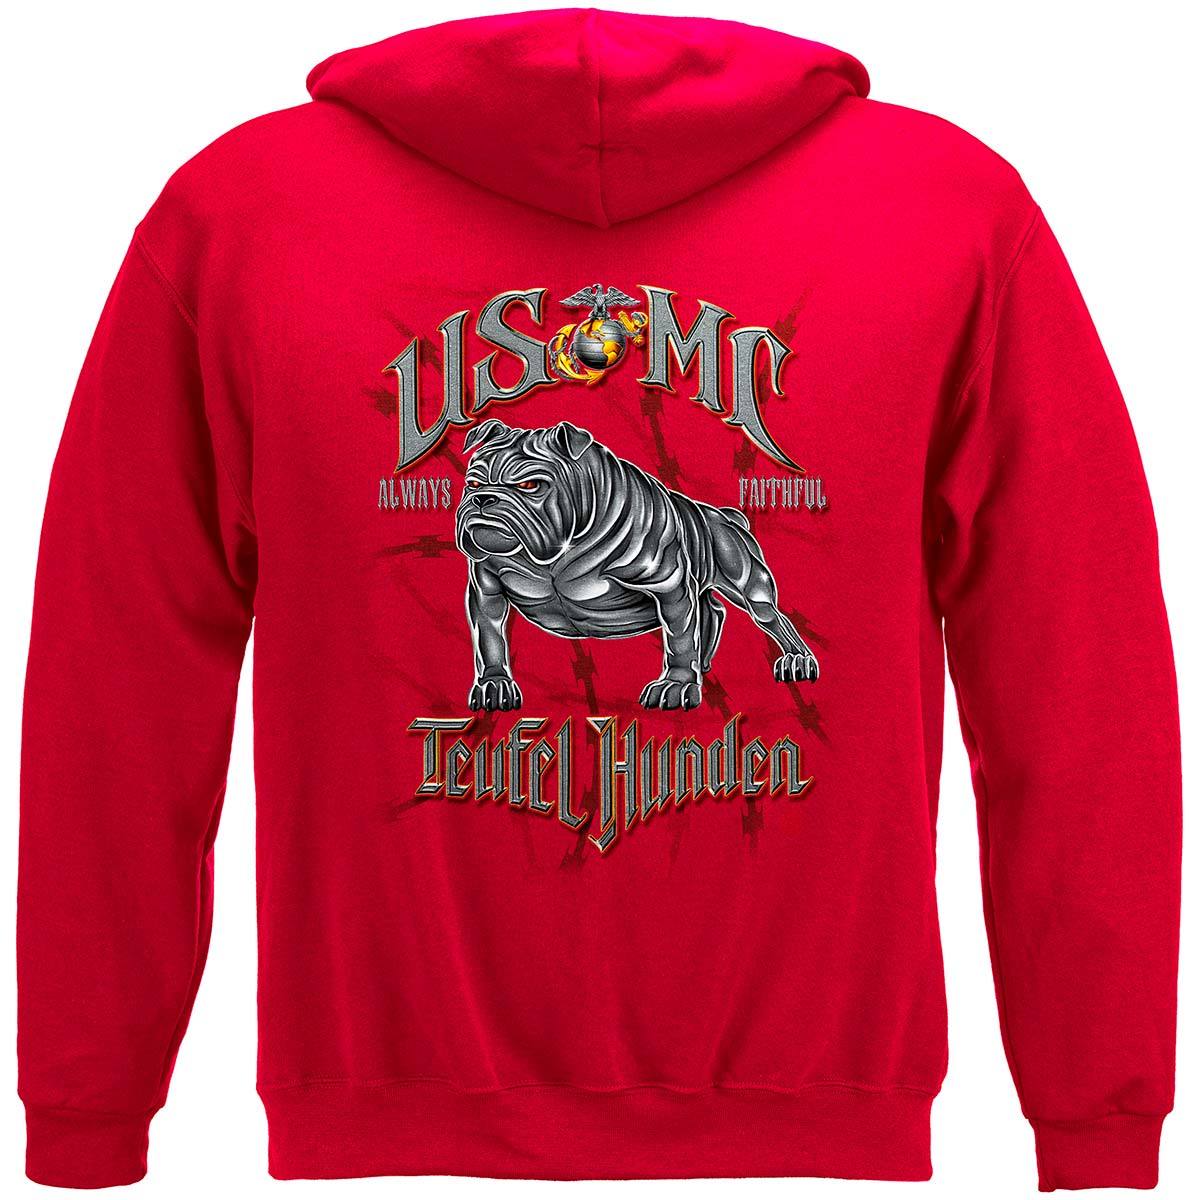 USMC Teufel Hunden Premium T-Shirt